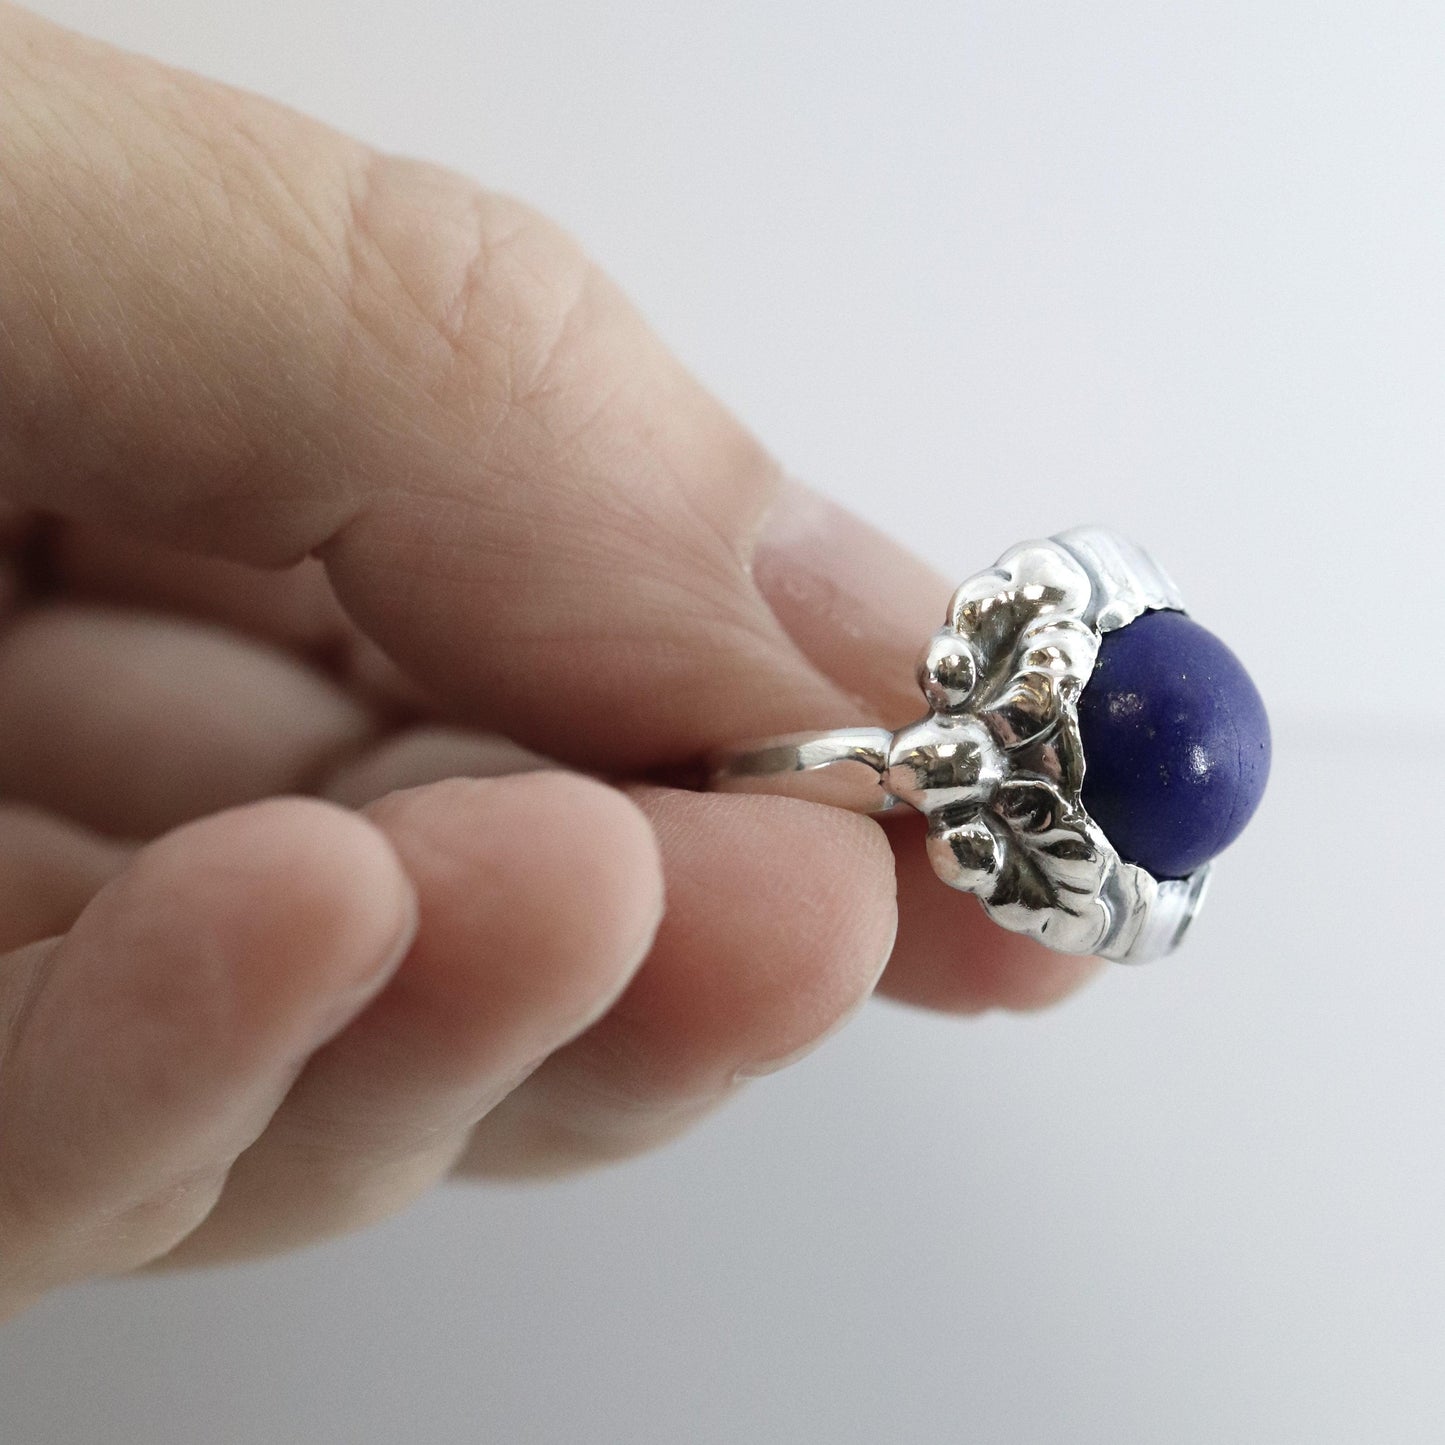 Vintage Georg Jensen Jewelry | Art Nouveau Lapis Lazuli Ring 11A - Carmel Fine Silver Jewelry